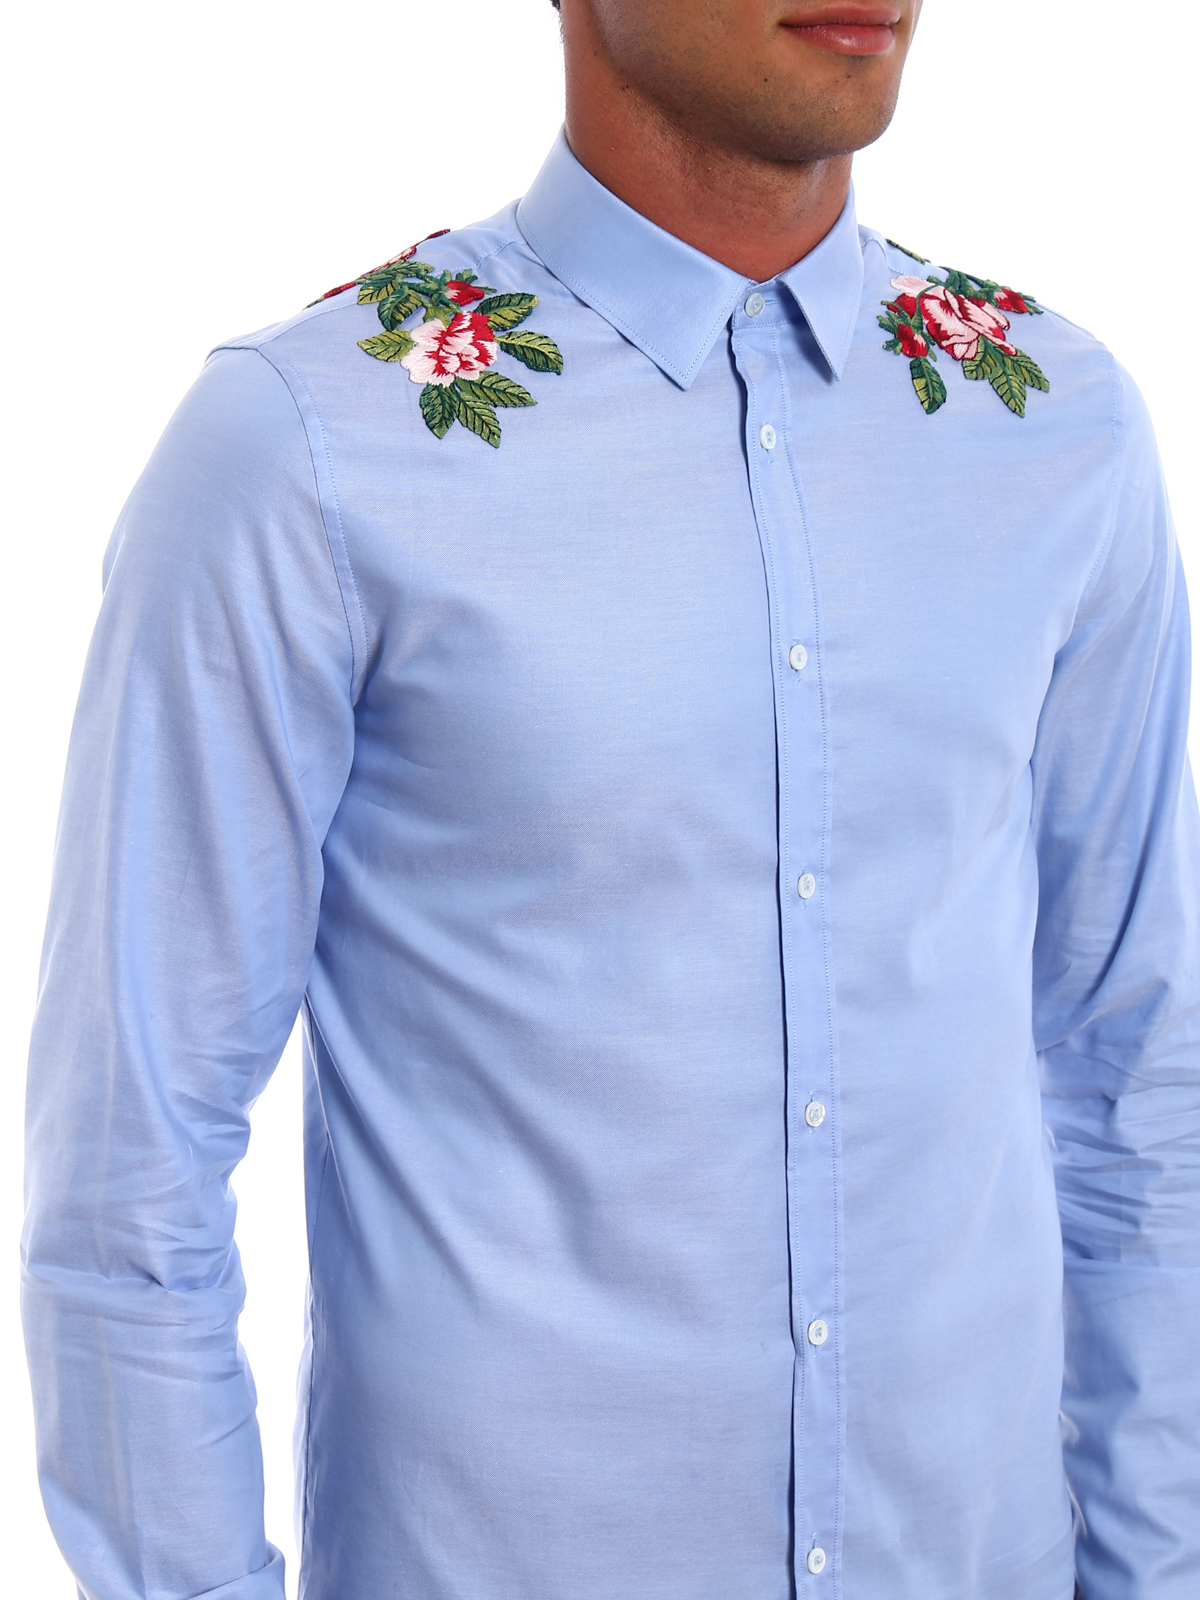 Gucci Embroidered Cotton Poplin Shirt